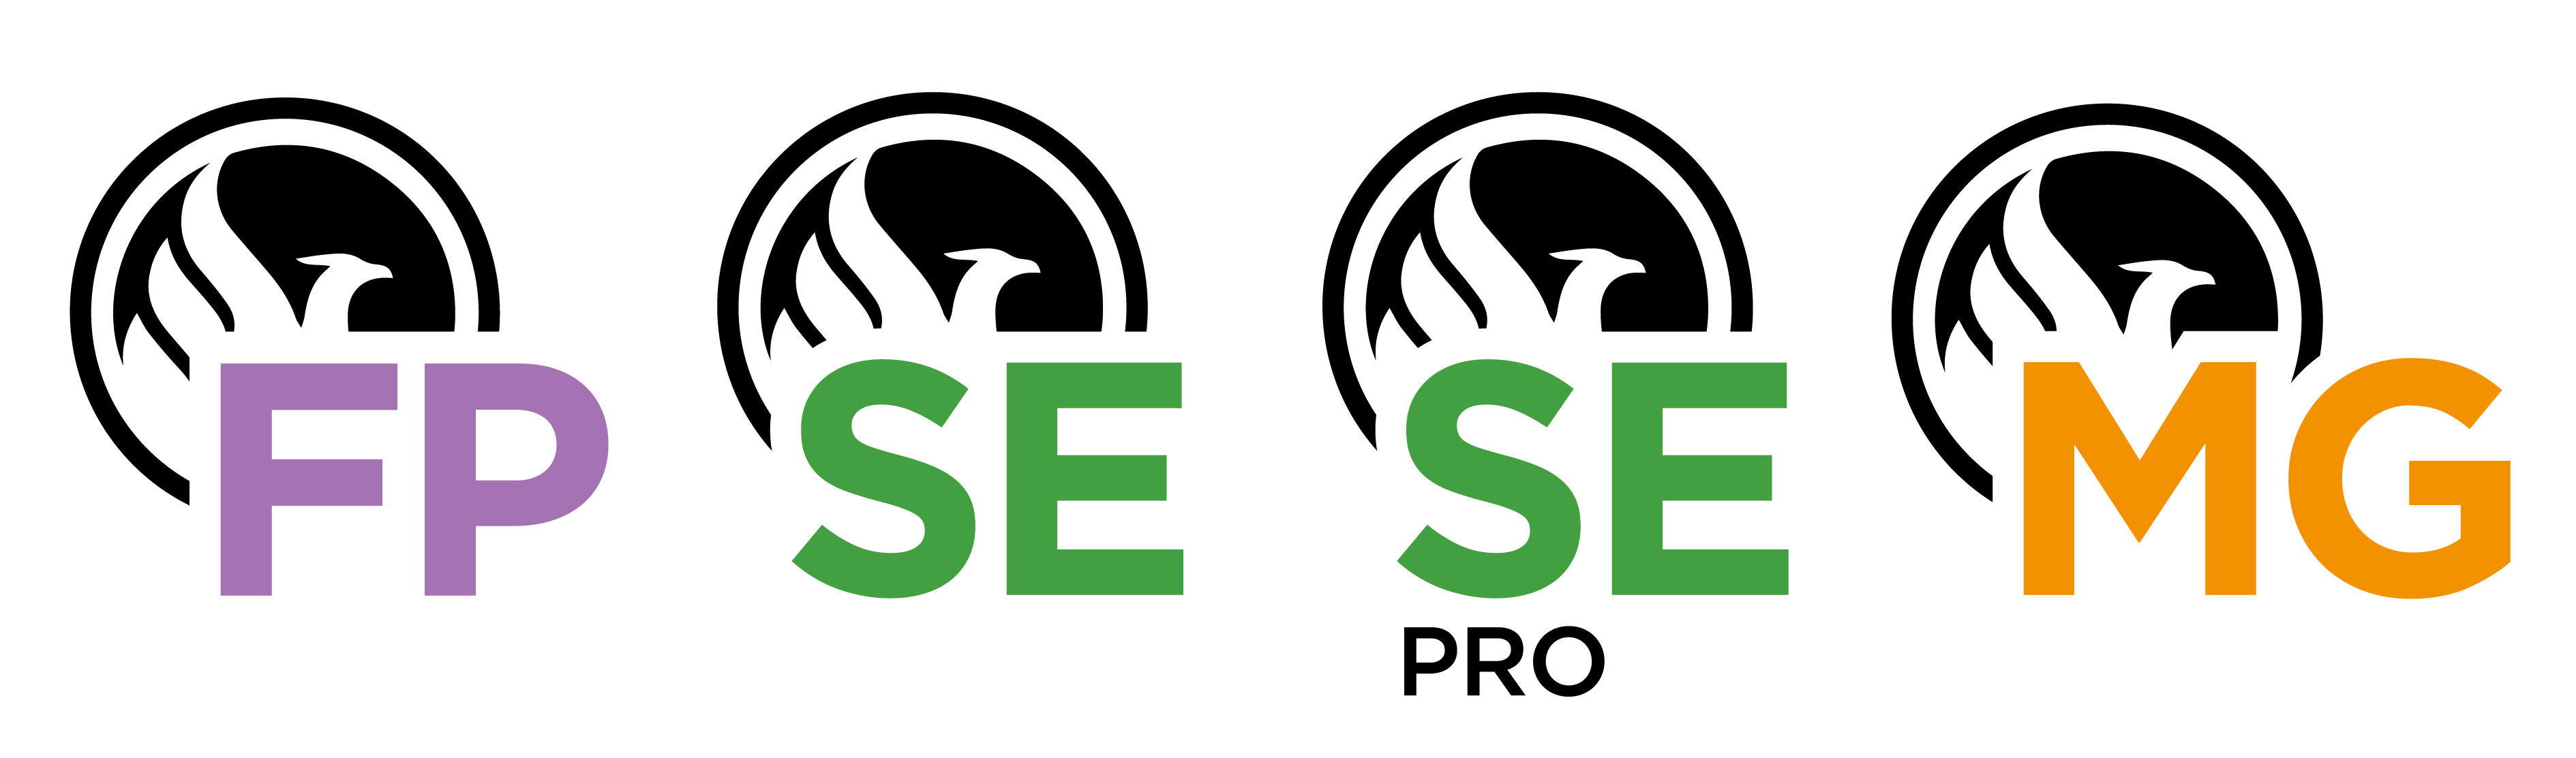 FP_SE_SE-PRO_MG Software Logo Group